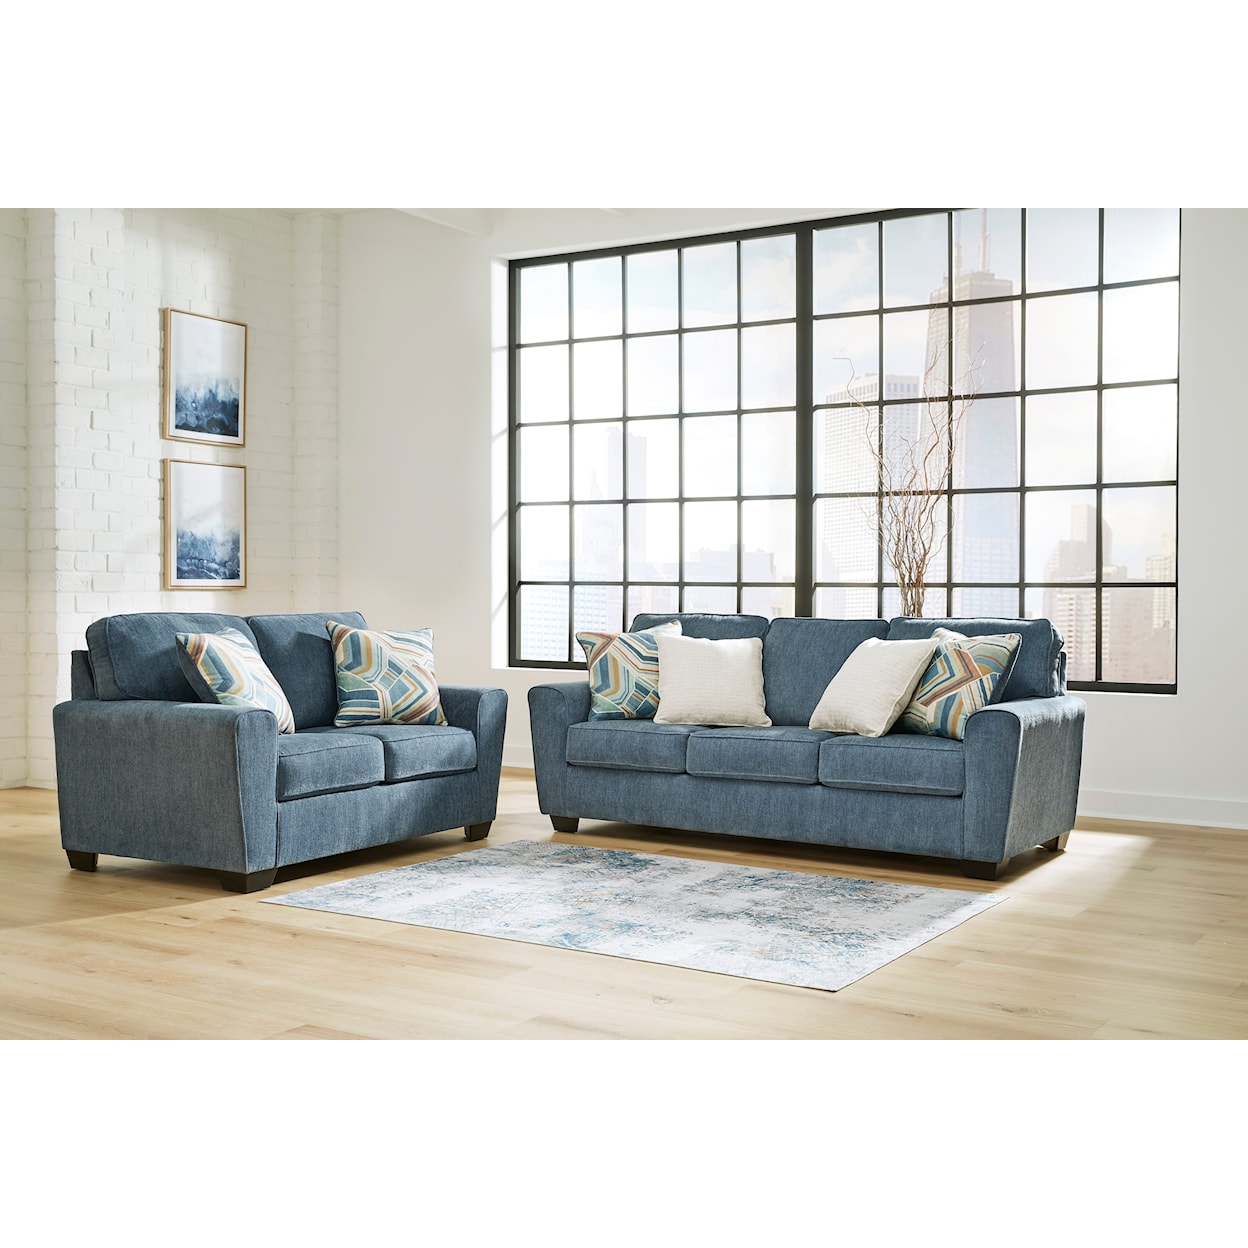 Ashley Furniture Signature Design Cashton 2-Piece Living Room Set